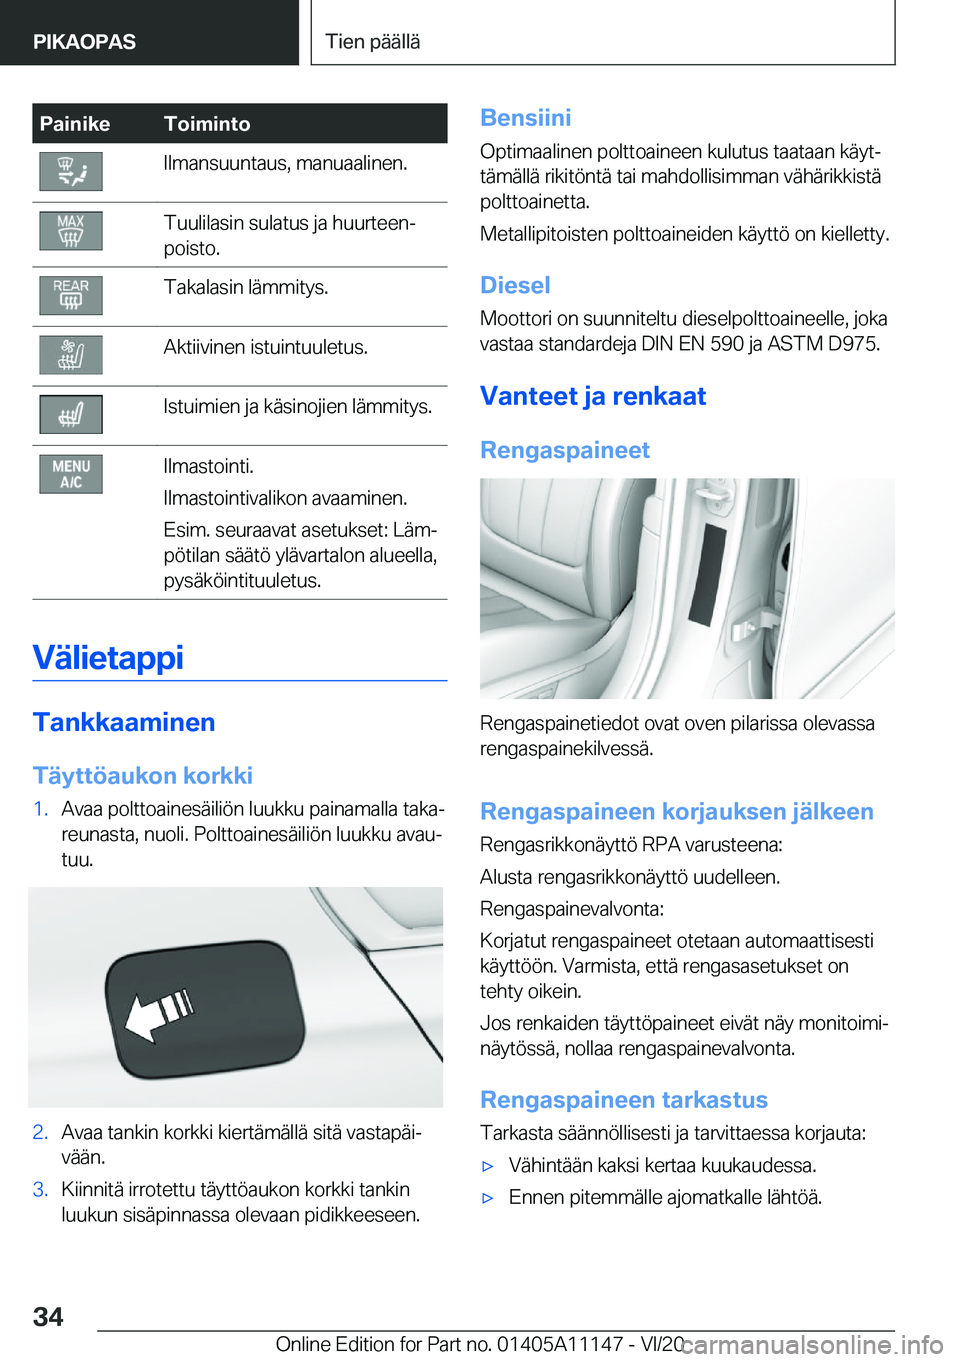 BMW 8 SERIES COUPE 2021  Omistajan Käsikirja (in Finnish) �P�a�i�n�i�k�e�T�o�i�m�i�n�t�o�I�l�m�a�n�s�u�u�n�t�a�u�s�,��m�a�n�u�a�a�l�i�n�e�n�.�T�u�u�l�i�l�a�s�i�n��s�u�l�a�t�u�s��j�a��h�u�u�r�t�e�e�nj
�p�o�i�s�t�o�.�T�a�k�a�l�a�s�i�n��l�